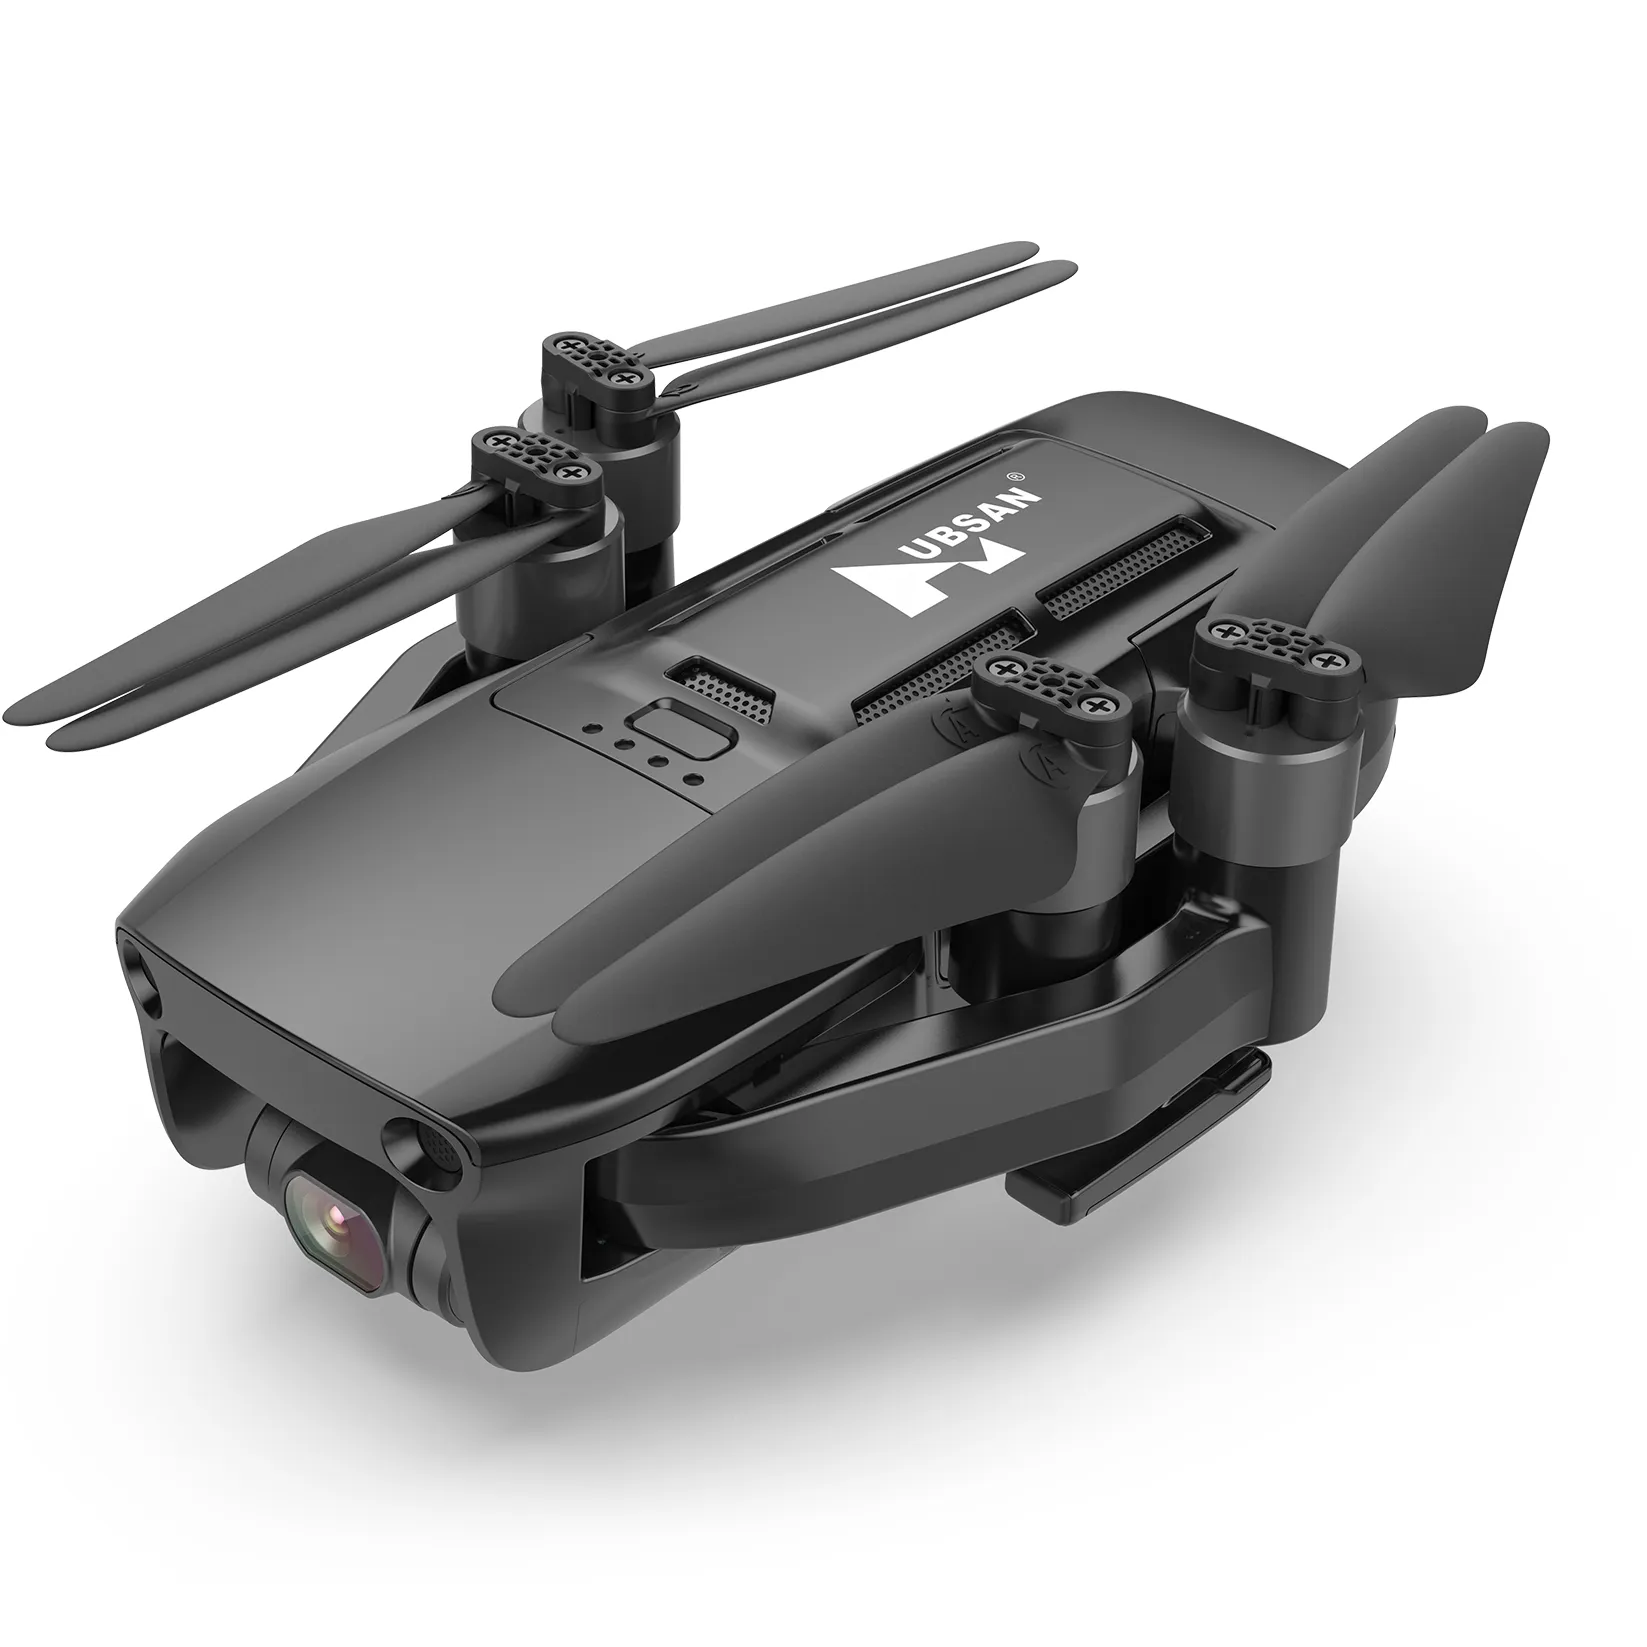 Yeni Hubsan BLACKHAWK 2 Drone standart sürüm 4K GPS 3-Axis Gimbal 33min uçuş 5KM FPV profesyonel RC profesyonel Quadcopter